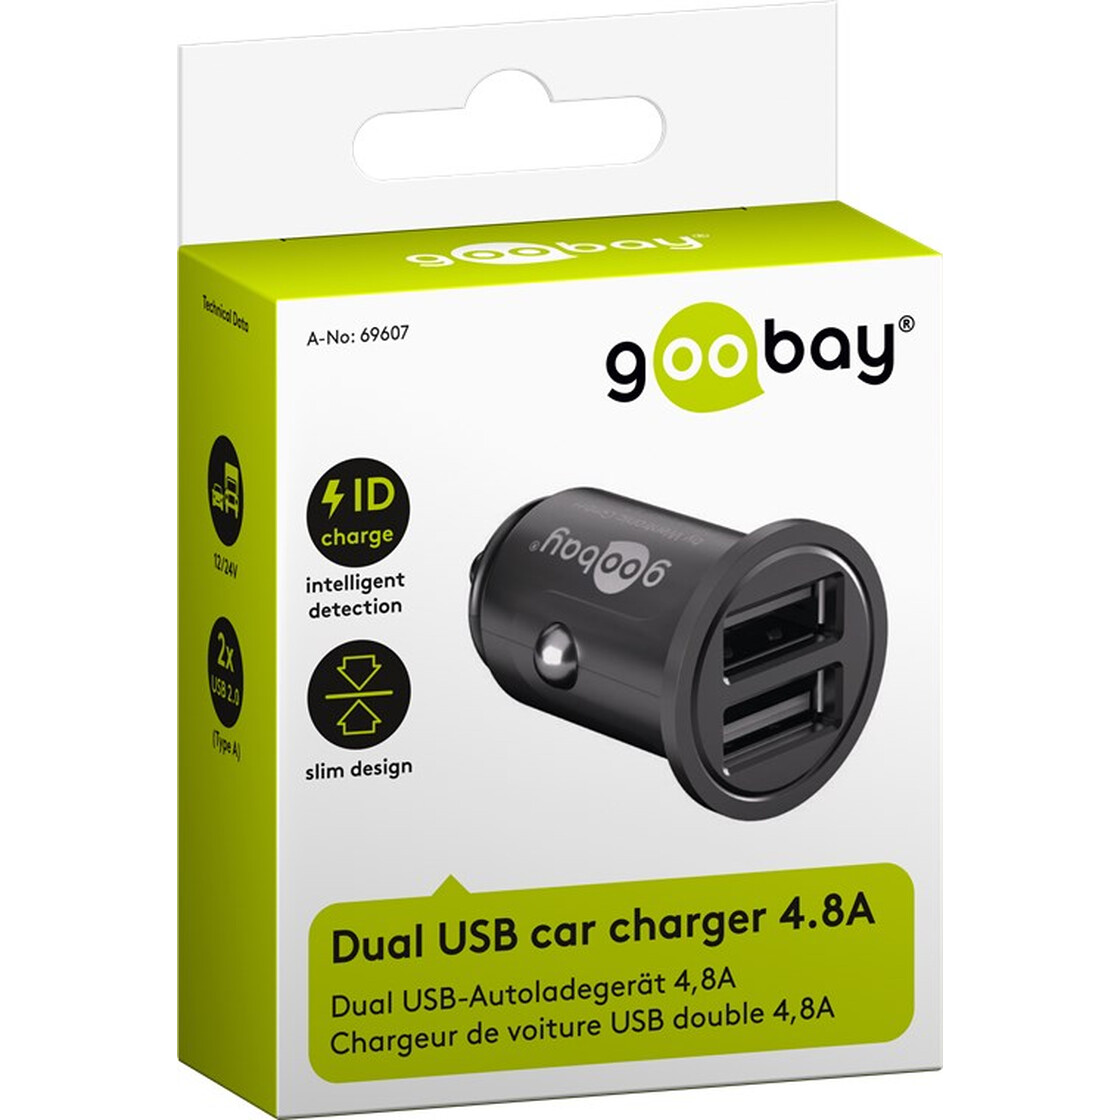 Goobay Dual-USB-Autoladegerät 4,8 A, 1 Stk. im Karton, Schwarz